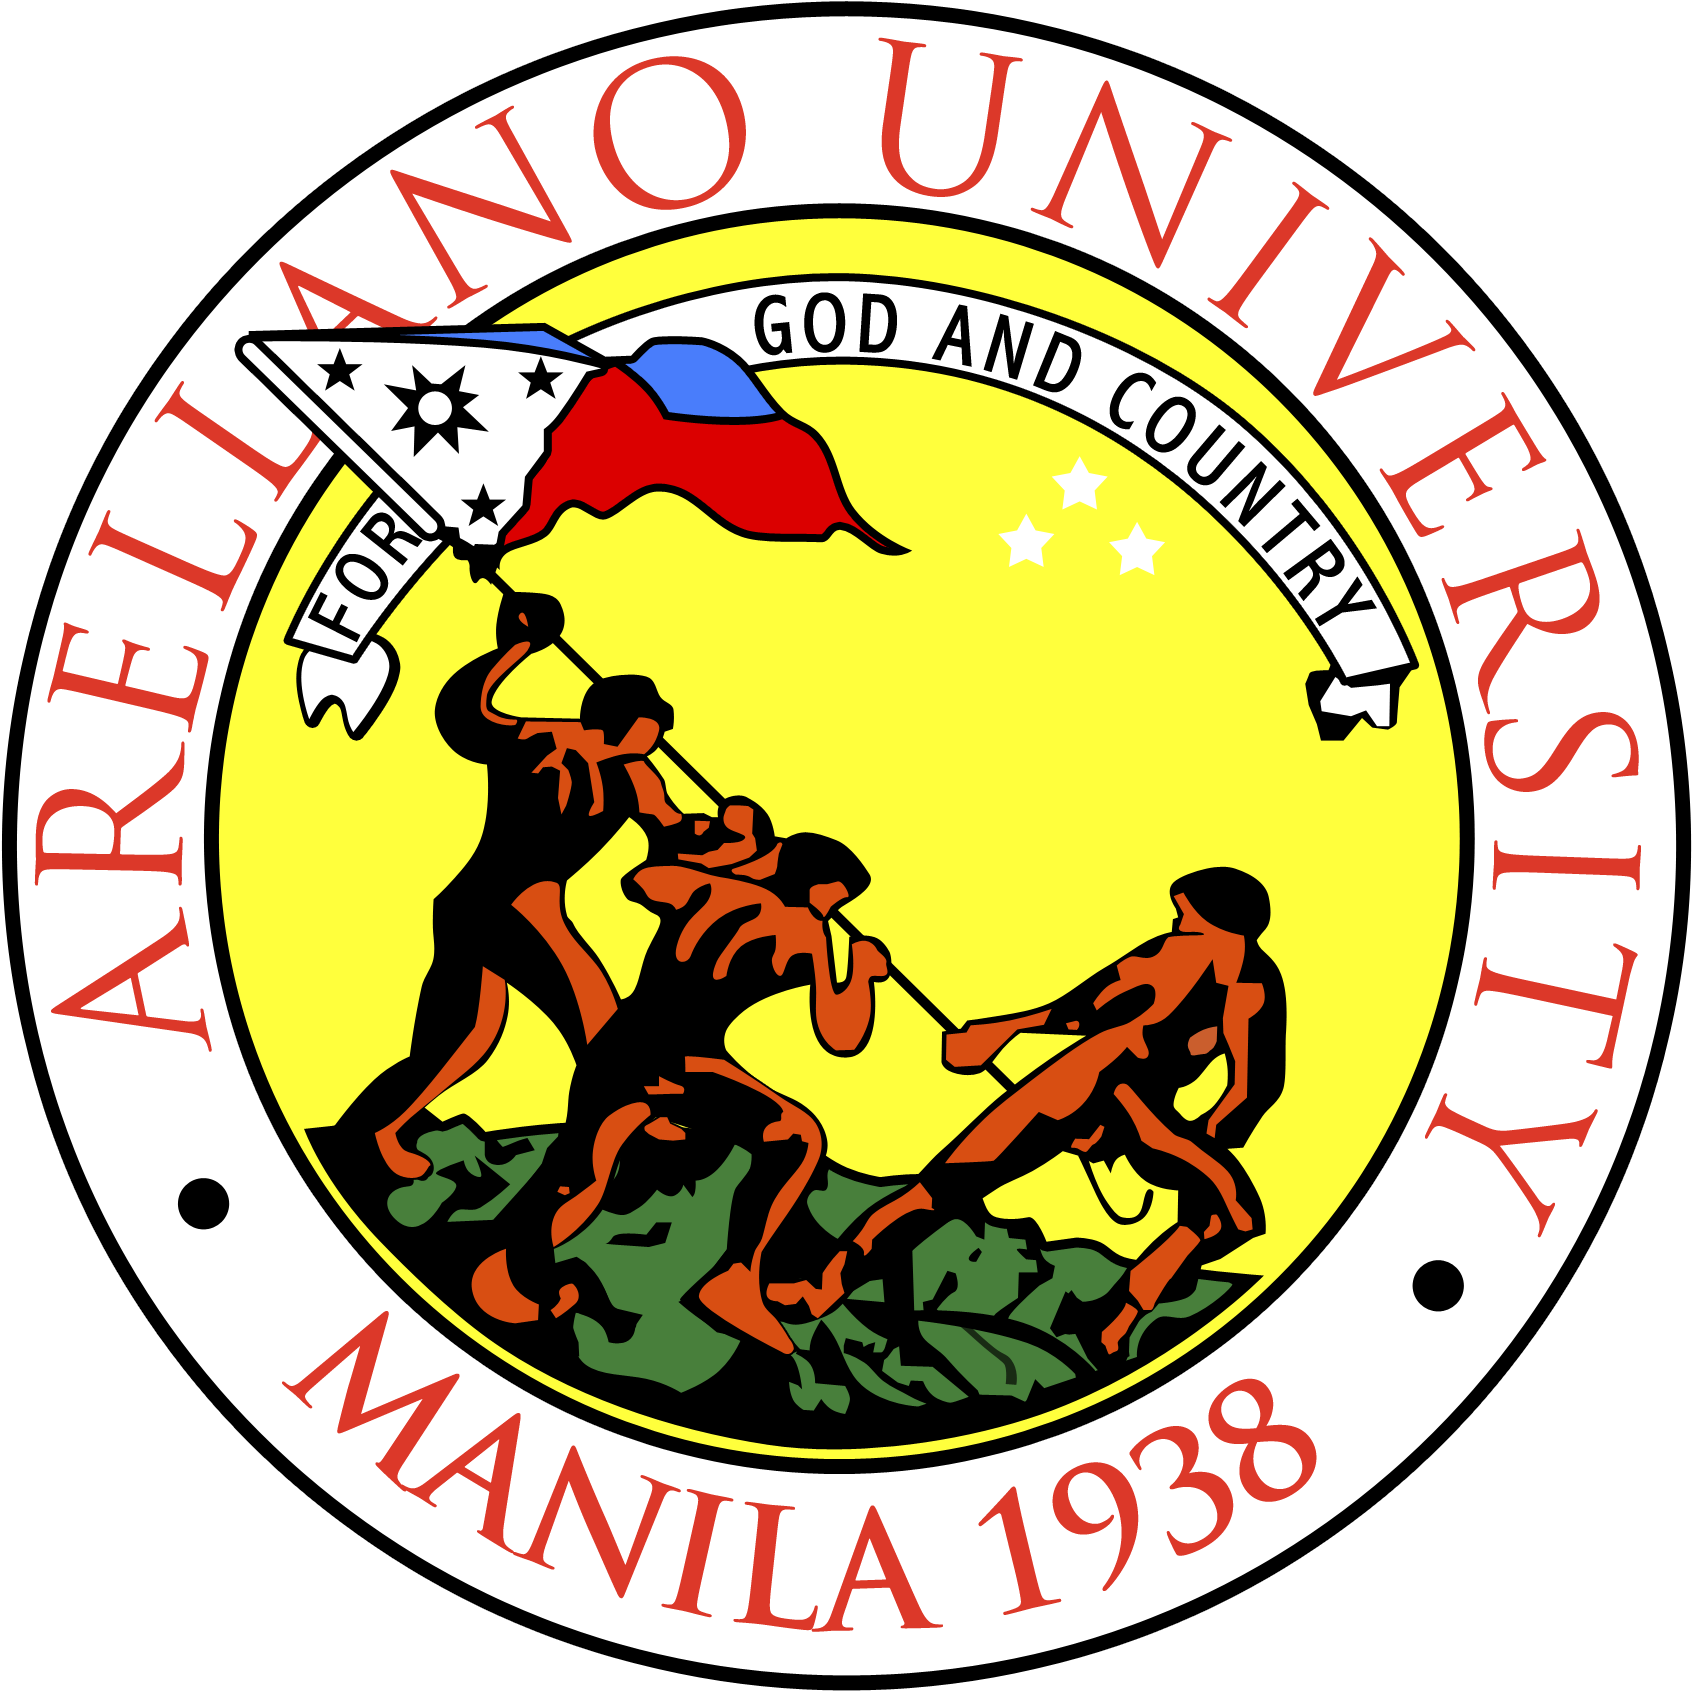 Phillipines Clipart International Student - Arellano University Malabon Logo (1800x1800)